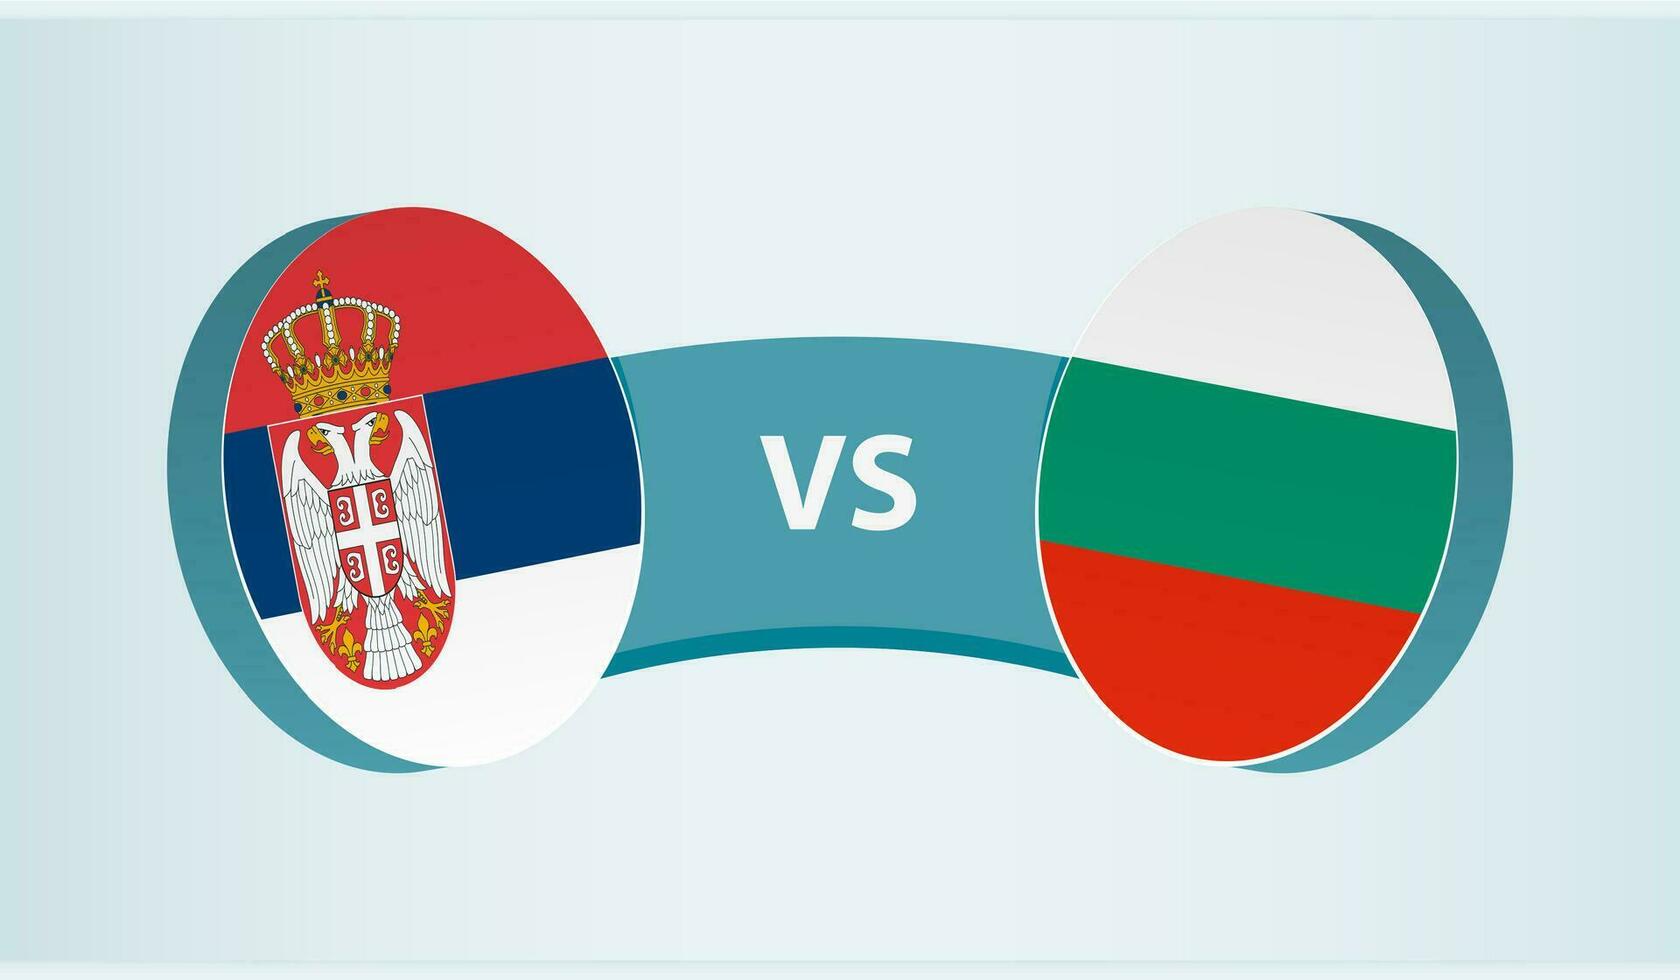 Serbia versus Bulgaria, team sports competition concept. vector